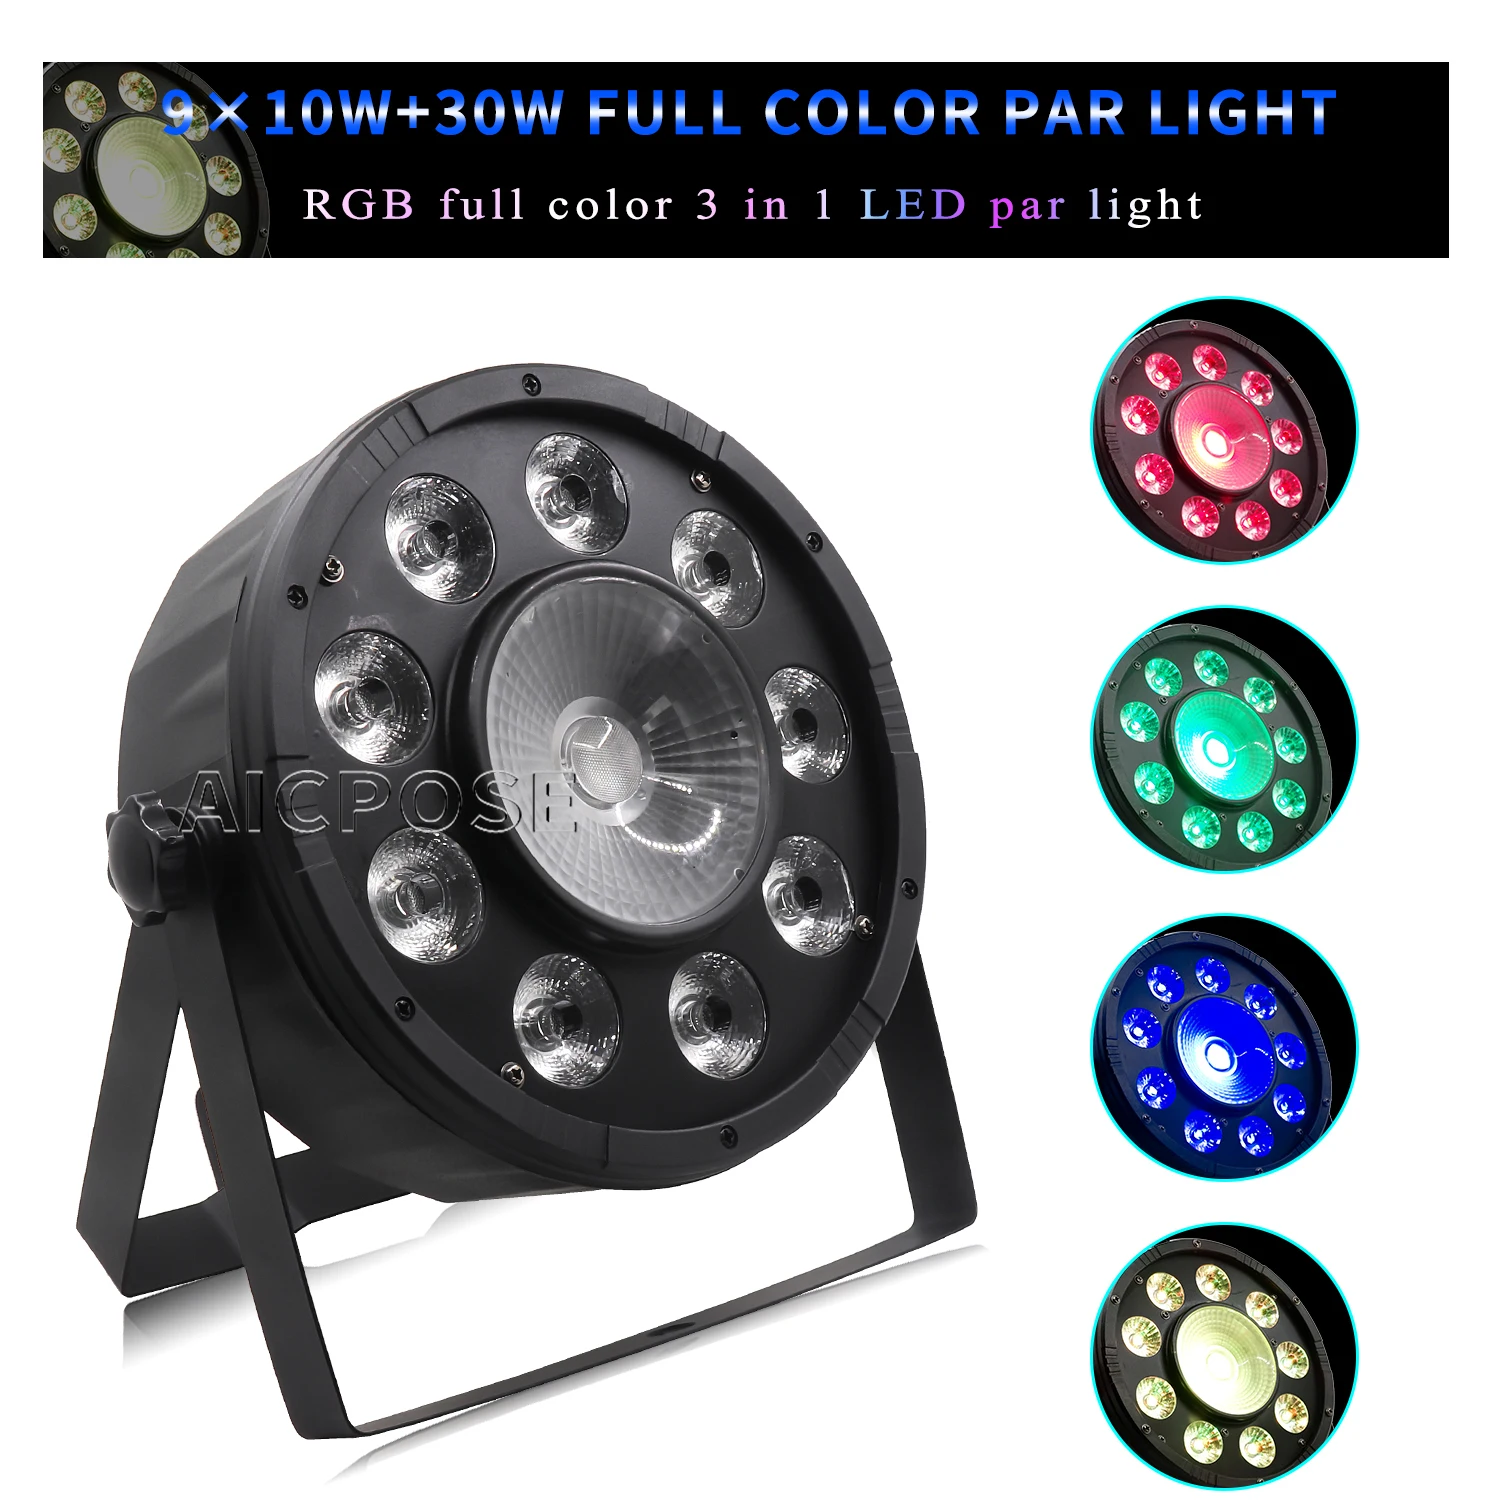 

9x10W+30W RGB 3 in 1 LED Par Light DMX512 Control Professional DJ Disco Equipment Stage Light Family Party Event Lighting